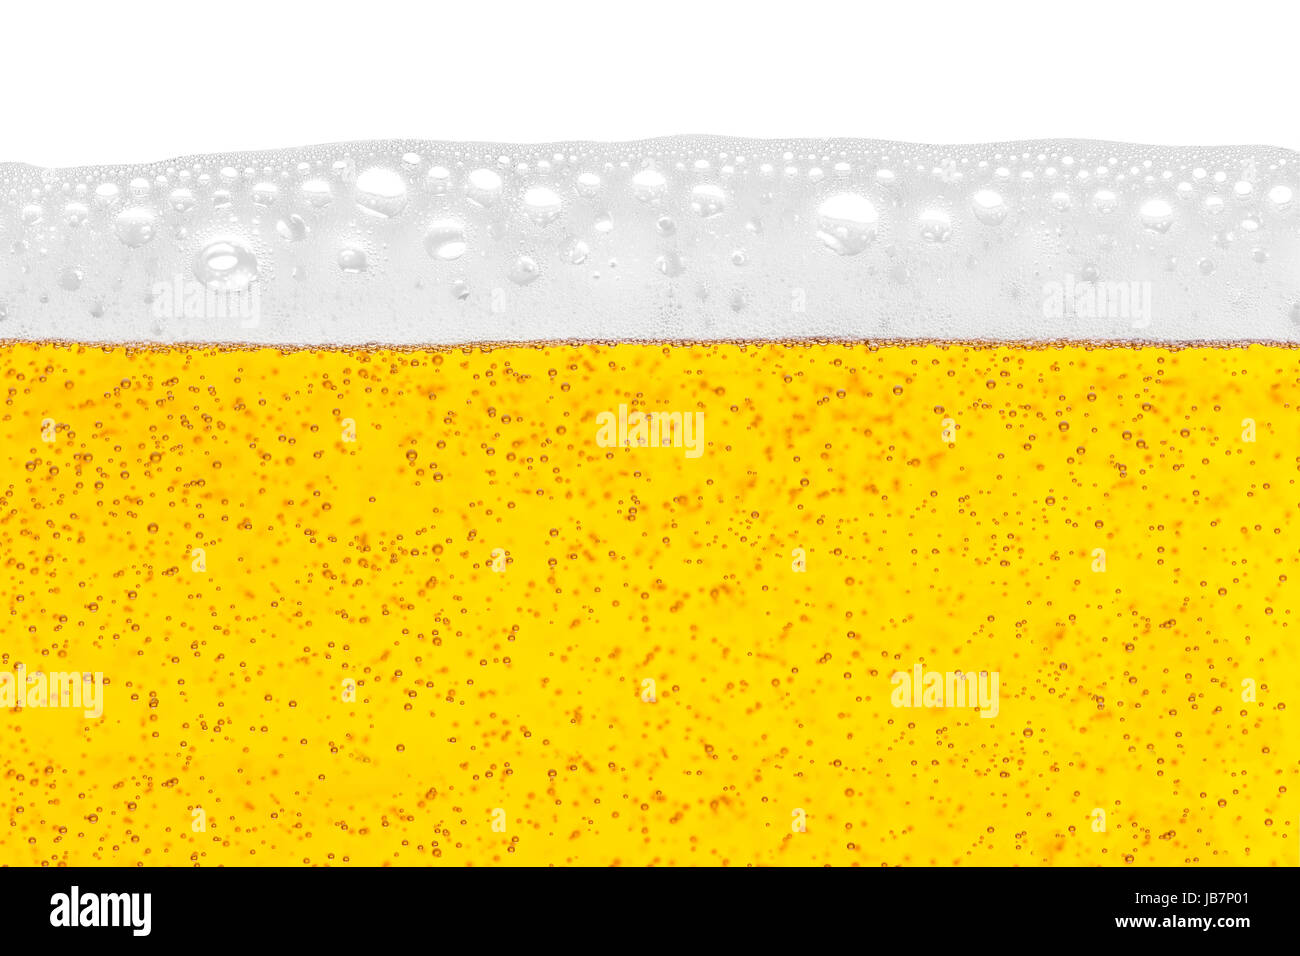 detailaufnahme eines Bieres Stock Photo